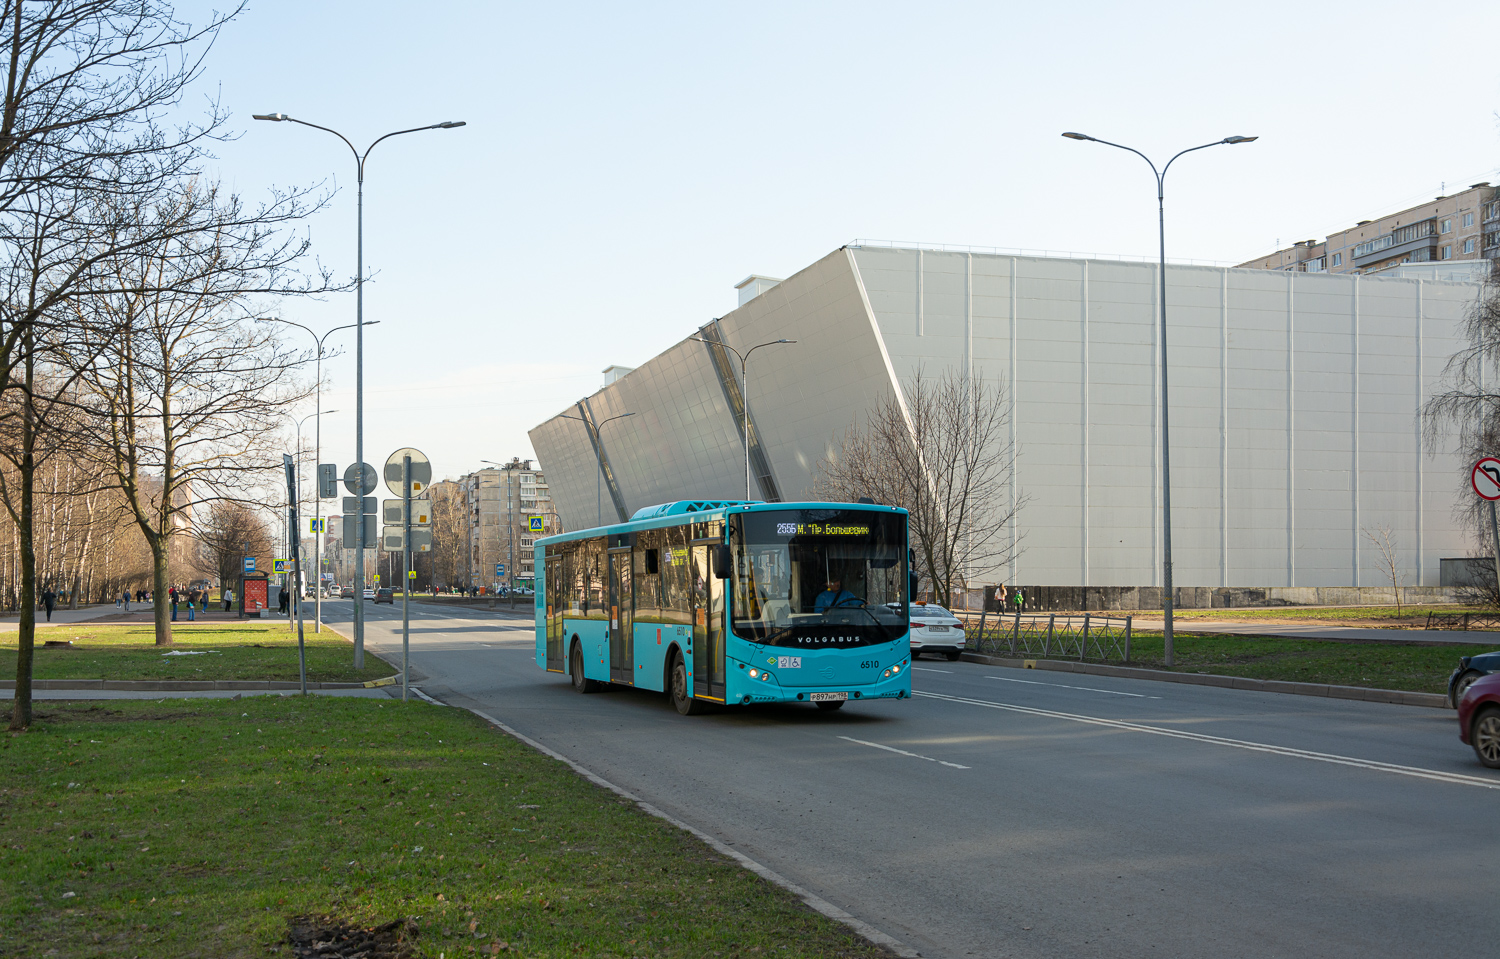 Saint Petersburg, Volgabus-5270.G4 (LNG) No. 6510